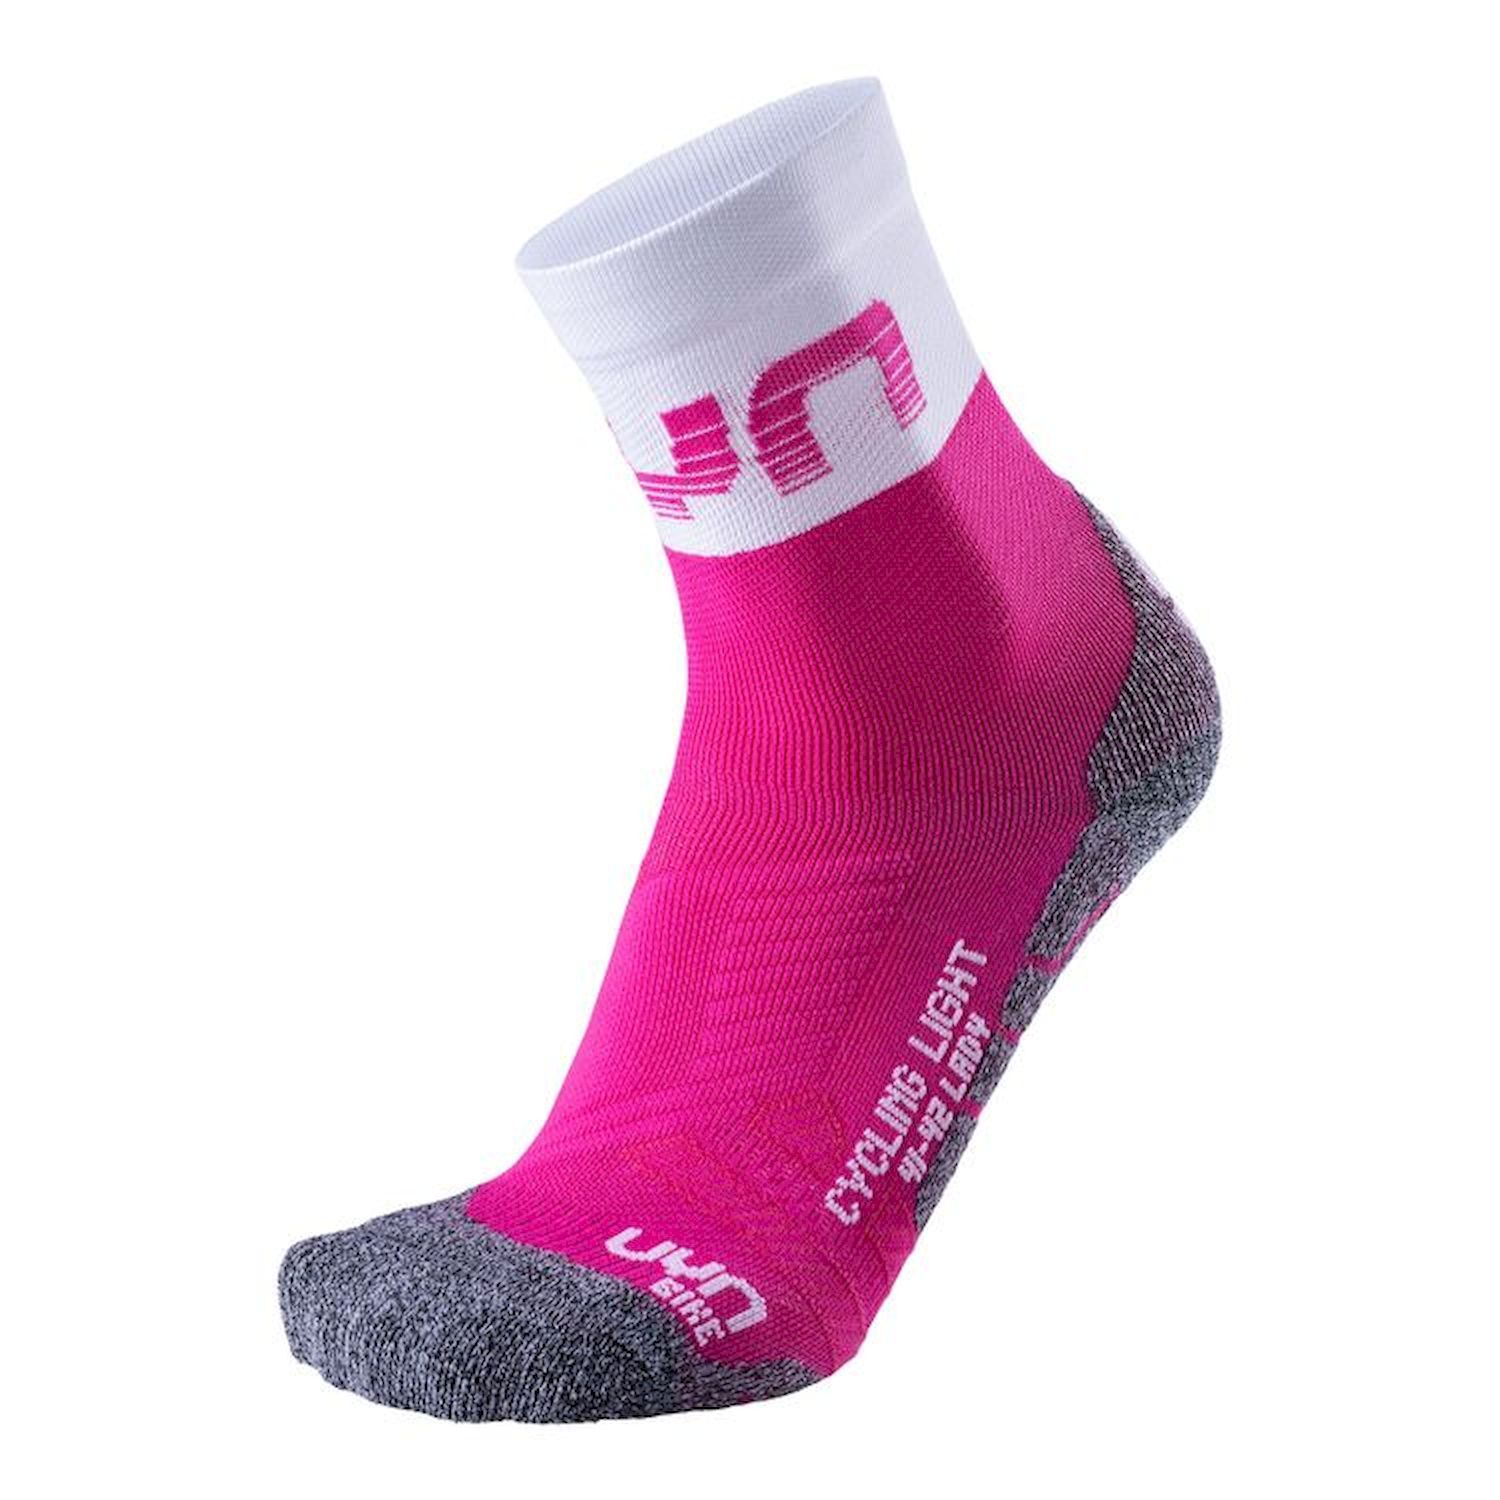 Uyn Cycling Light Socks - Calcetines ciclismo - Mujer